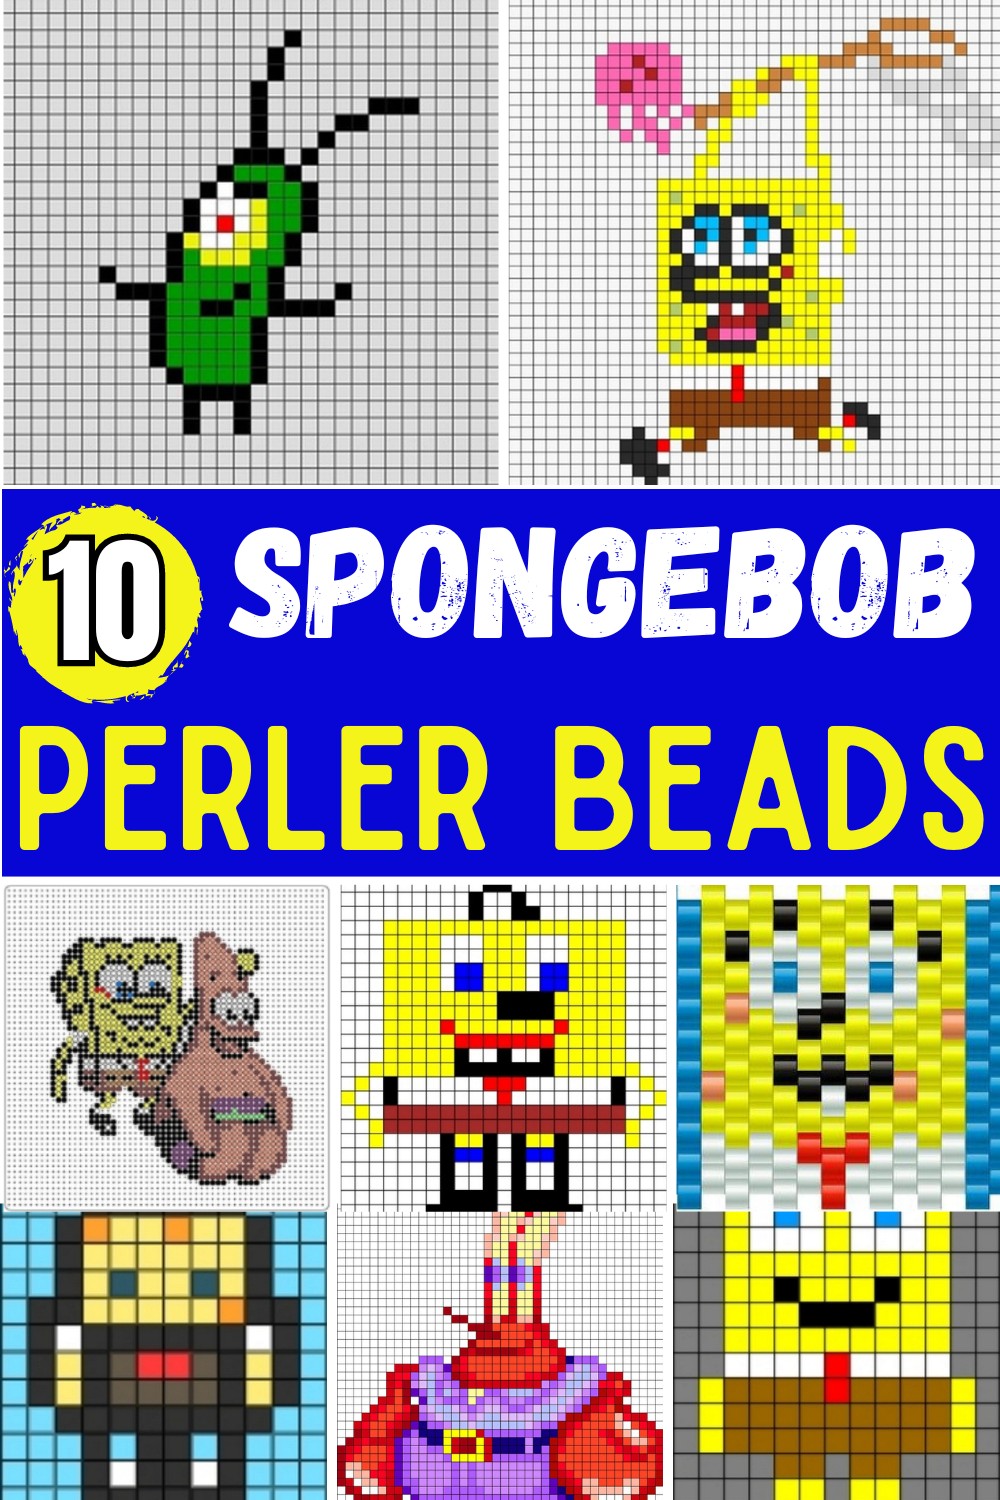 SpongeBob Perler Beads Patterns